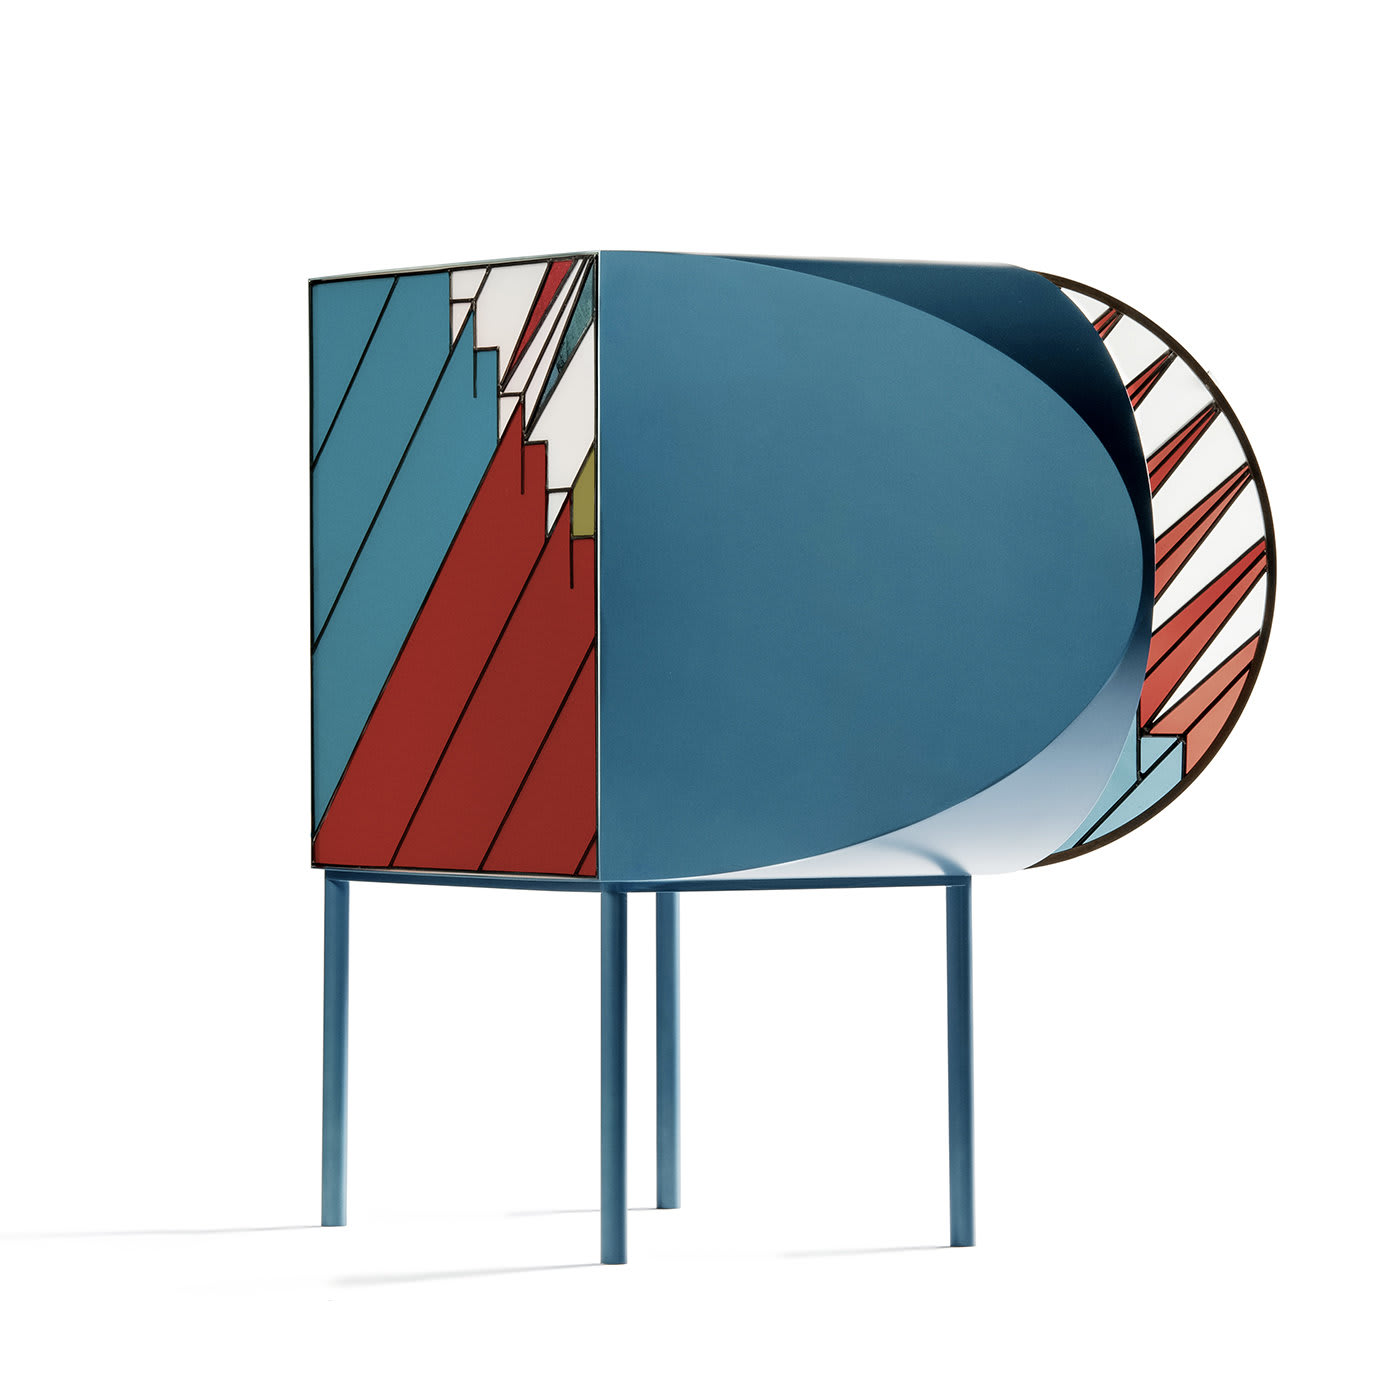 Credenza Sideboard by Patricia Urquiola and Federico Pepe - Editions Milano